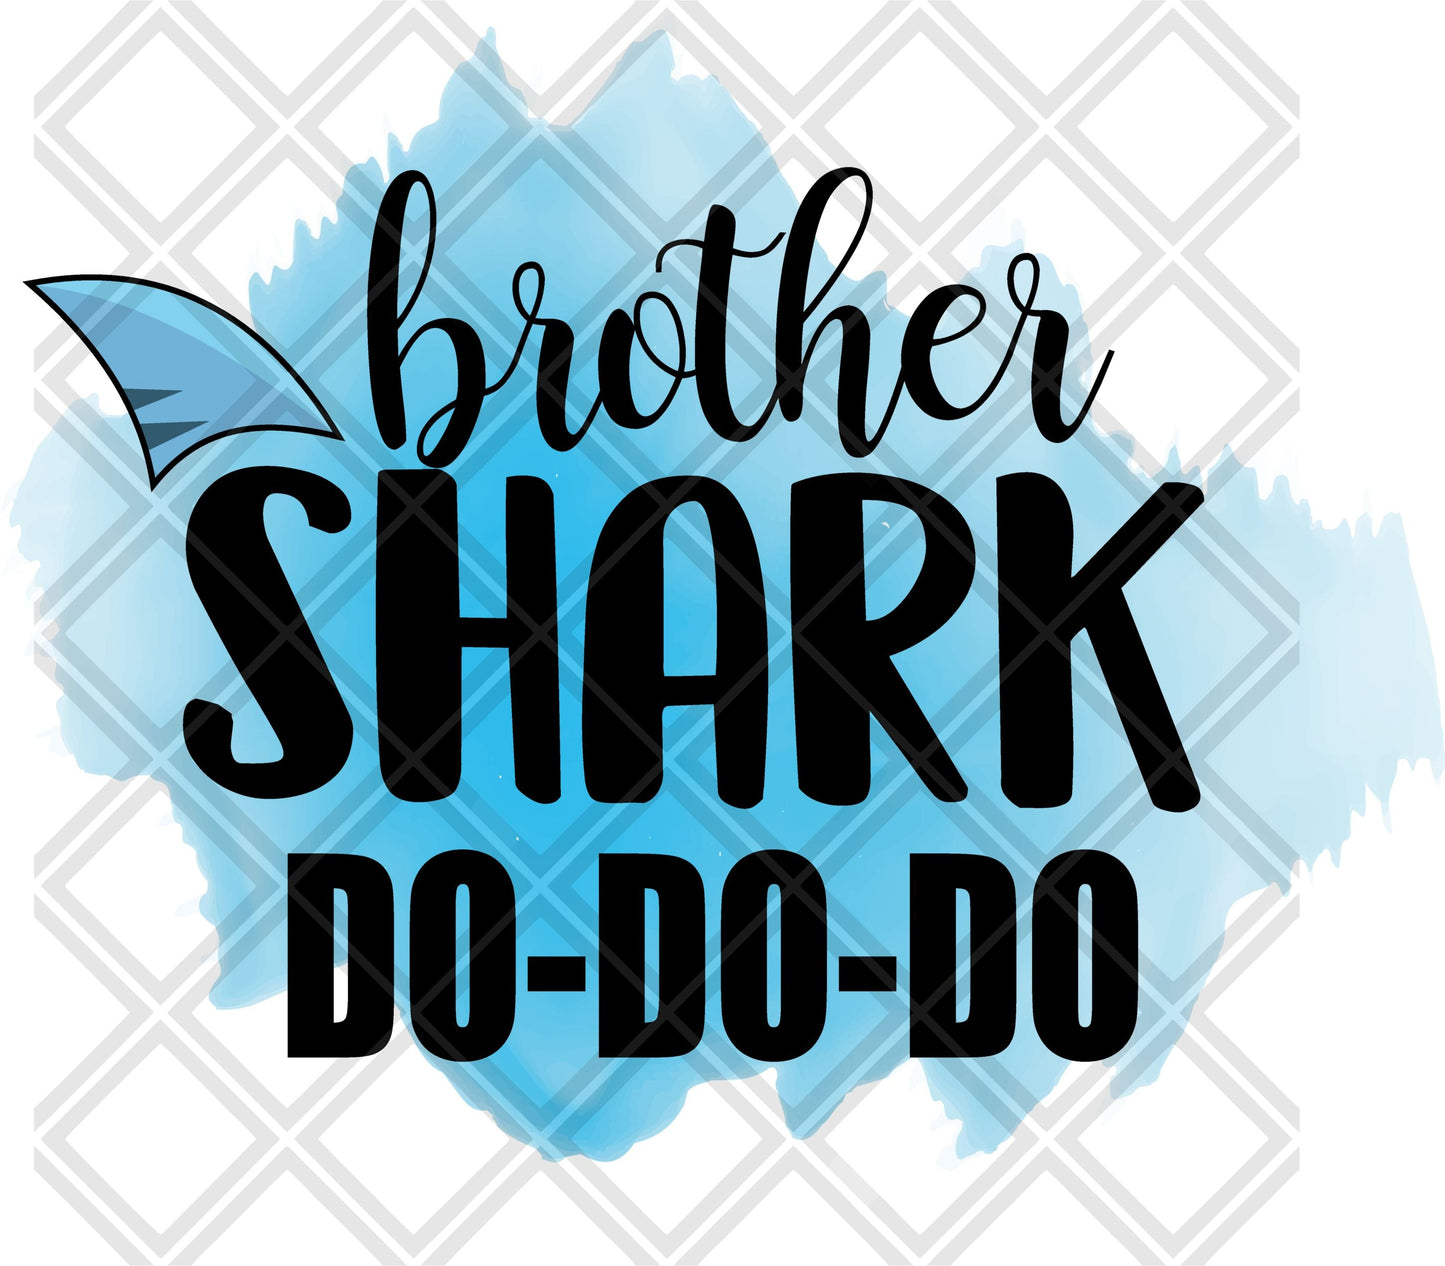 brother shark Digital Download Instand Download